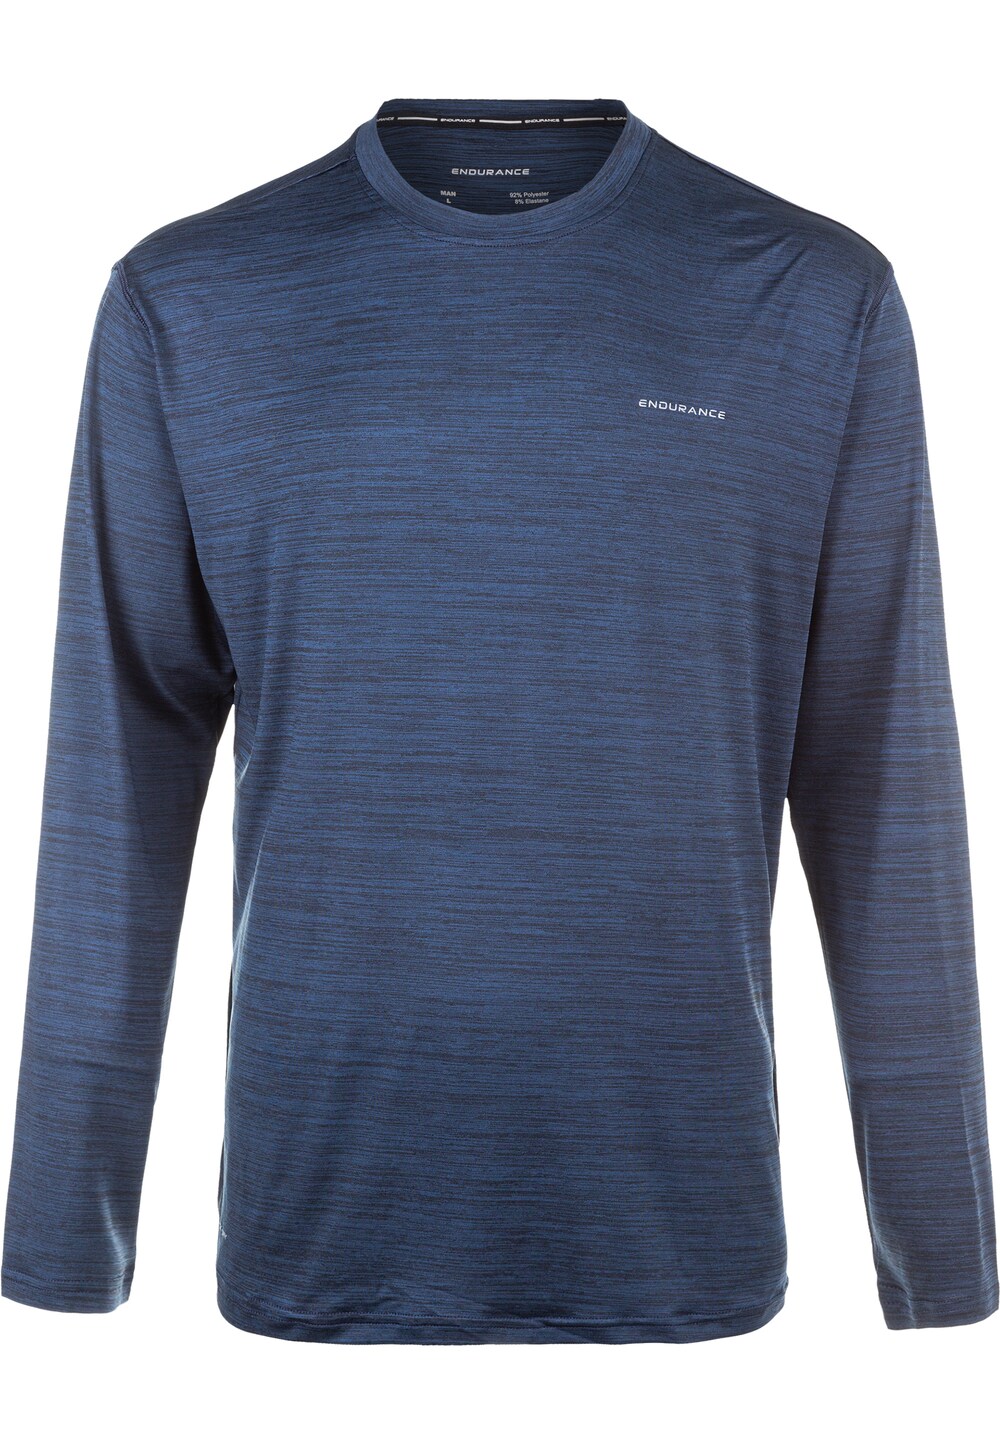 Рубашка для выступлений Endurance, темно-синий рубашка для выступлений endurance keskon синий